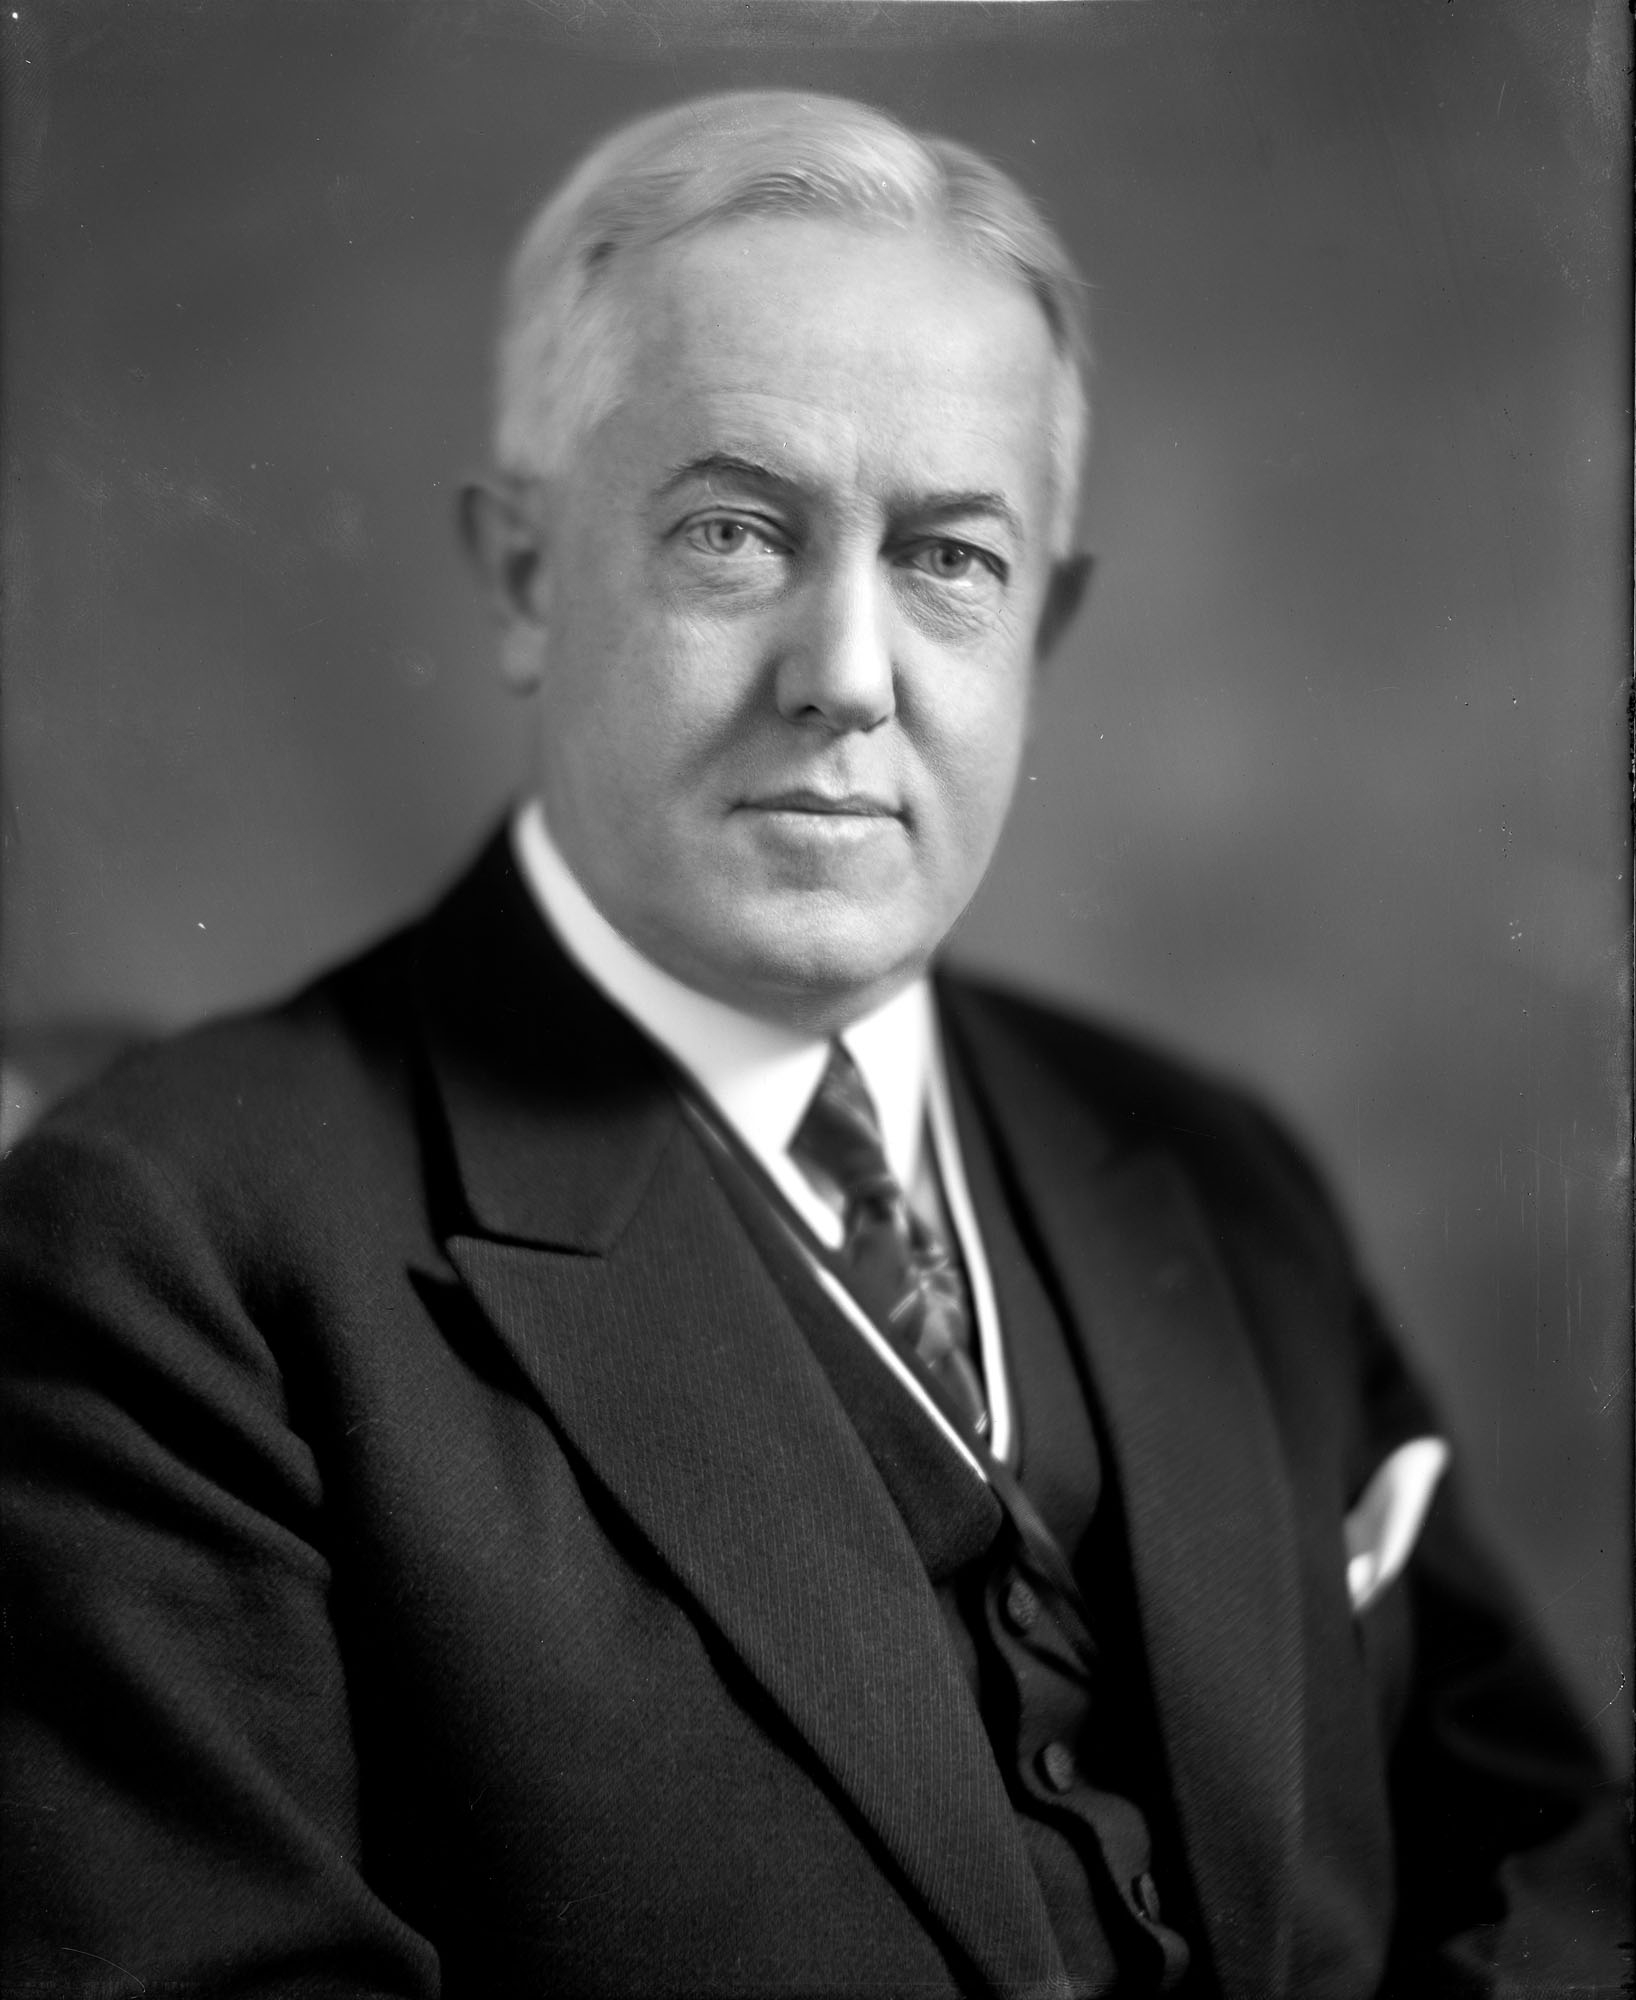 John W. Davis